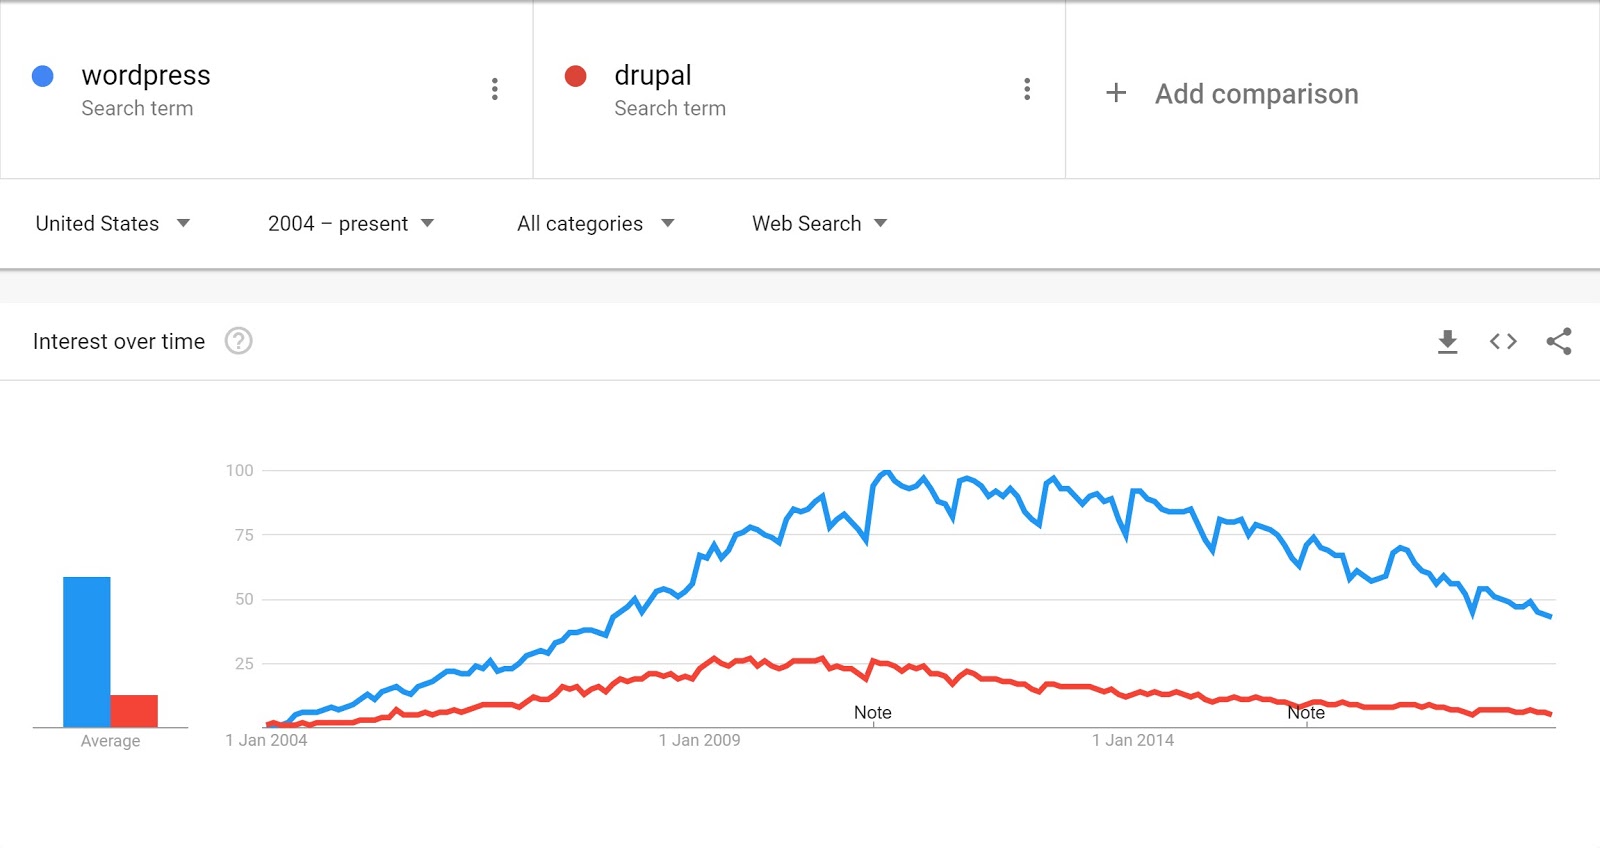 Google Trends WordPress vs Drupal